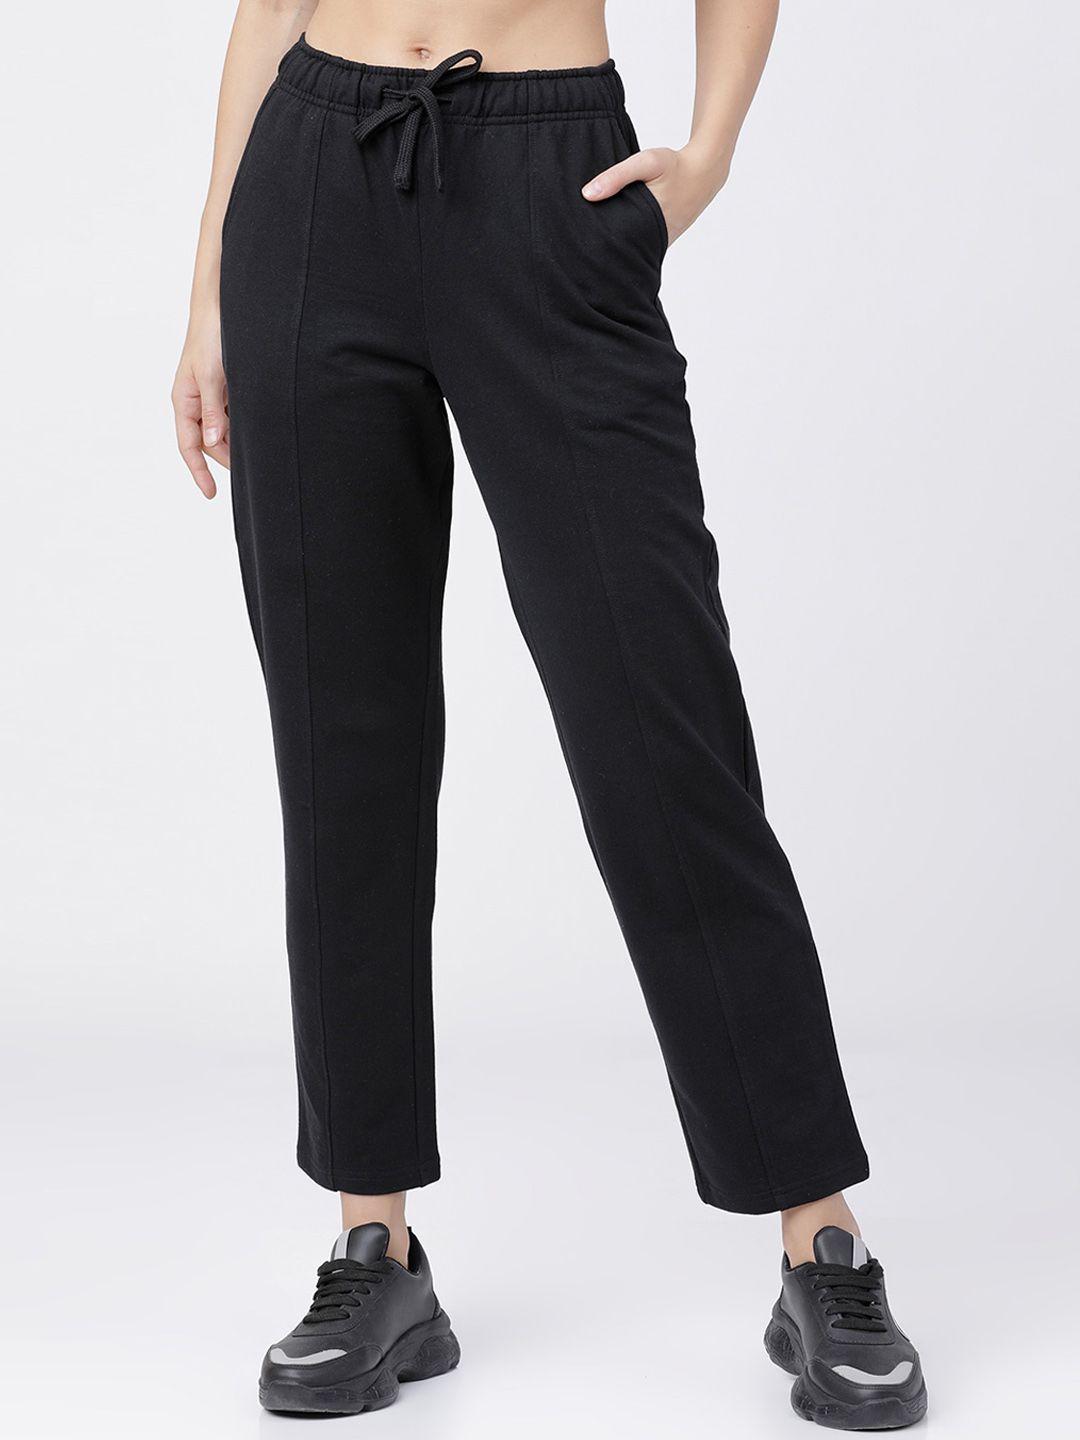 tokyo-talkies-women-black-solid-regular-fit-track-pants